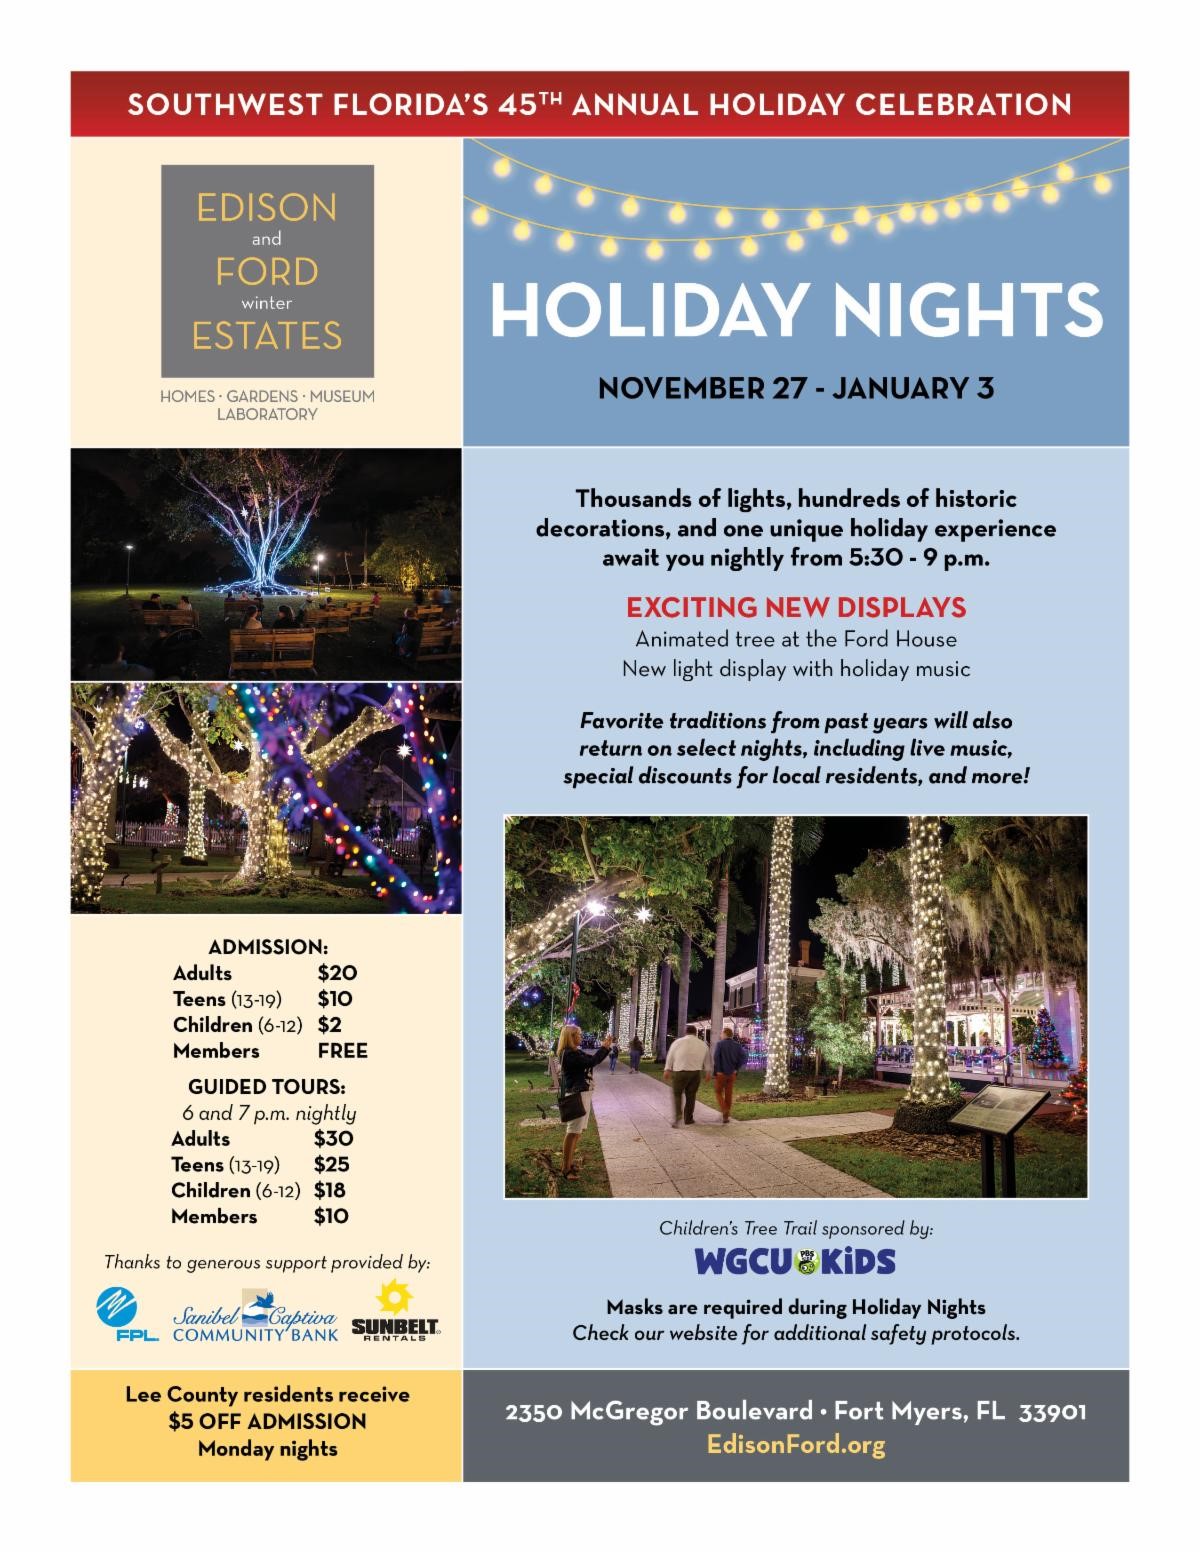 Edison Ford Holiday Nights